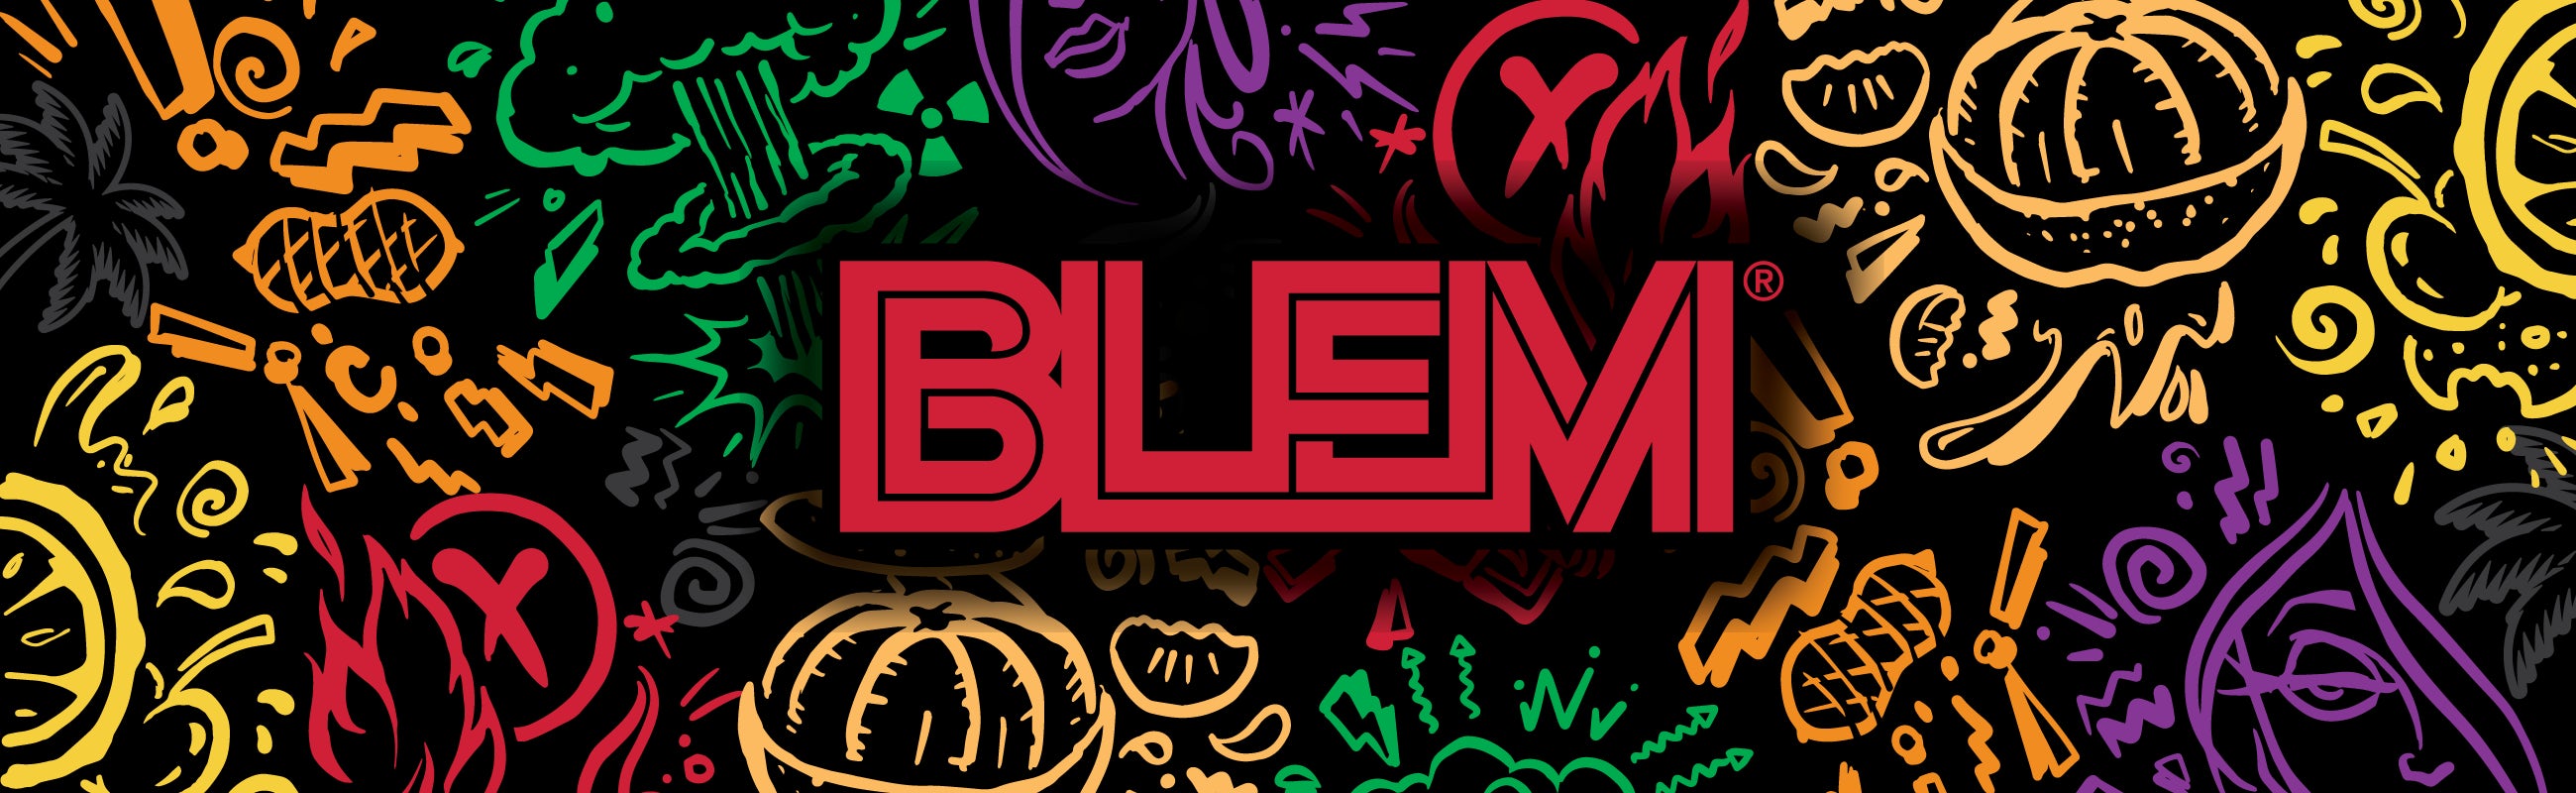 BLEM banner